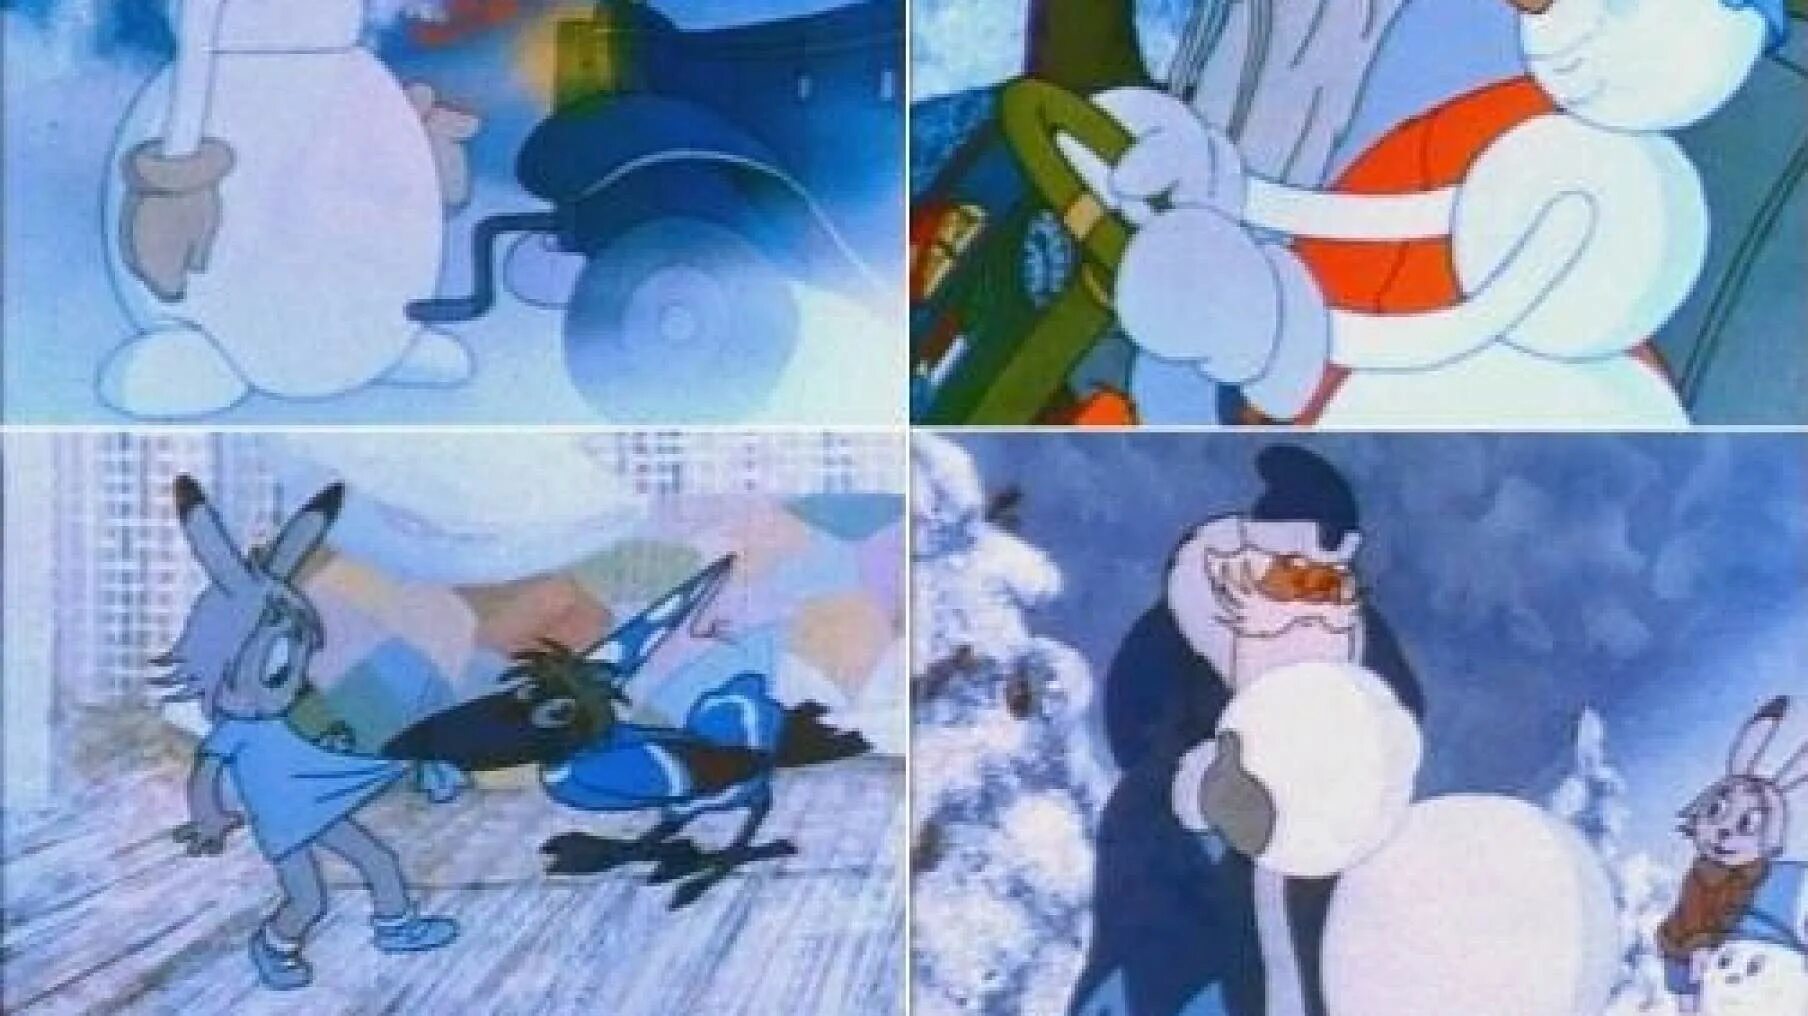 Волк мороз. Дед Мороз и серый волк мультфильм. М/Ф дед Мороз и серый волк. Дед Мороз и серый волк мультфильм 1978 волк. Дед Мороз и серый волк мультфильм 1978 Снеговик.